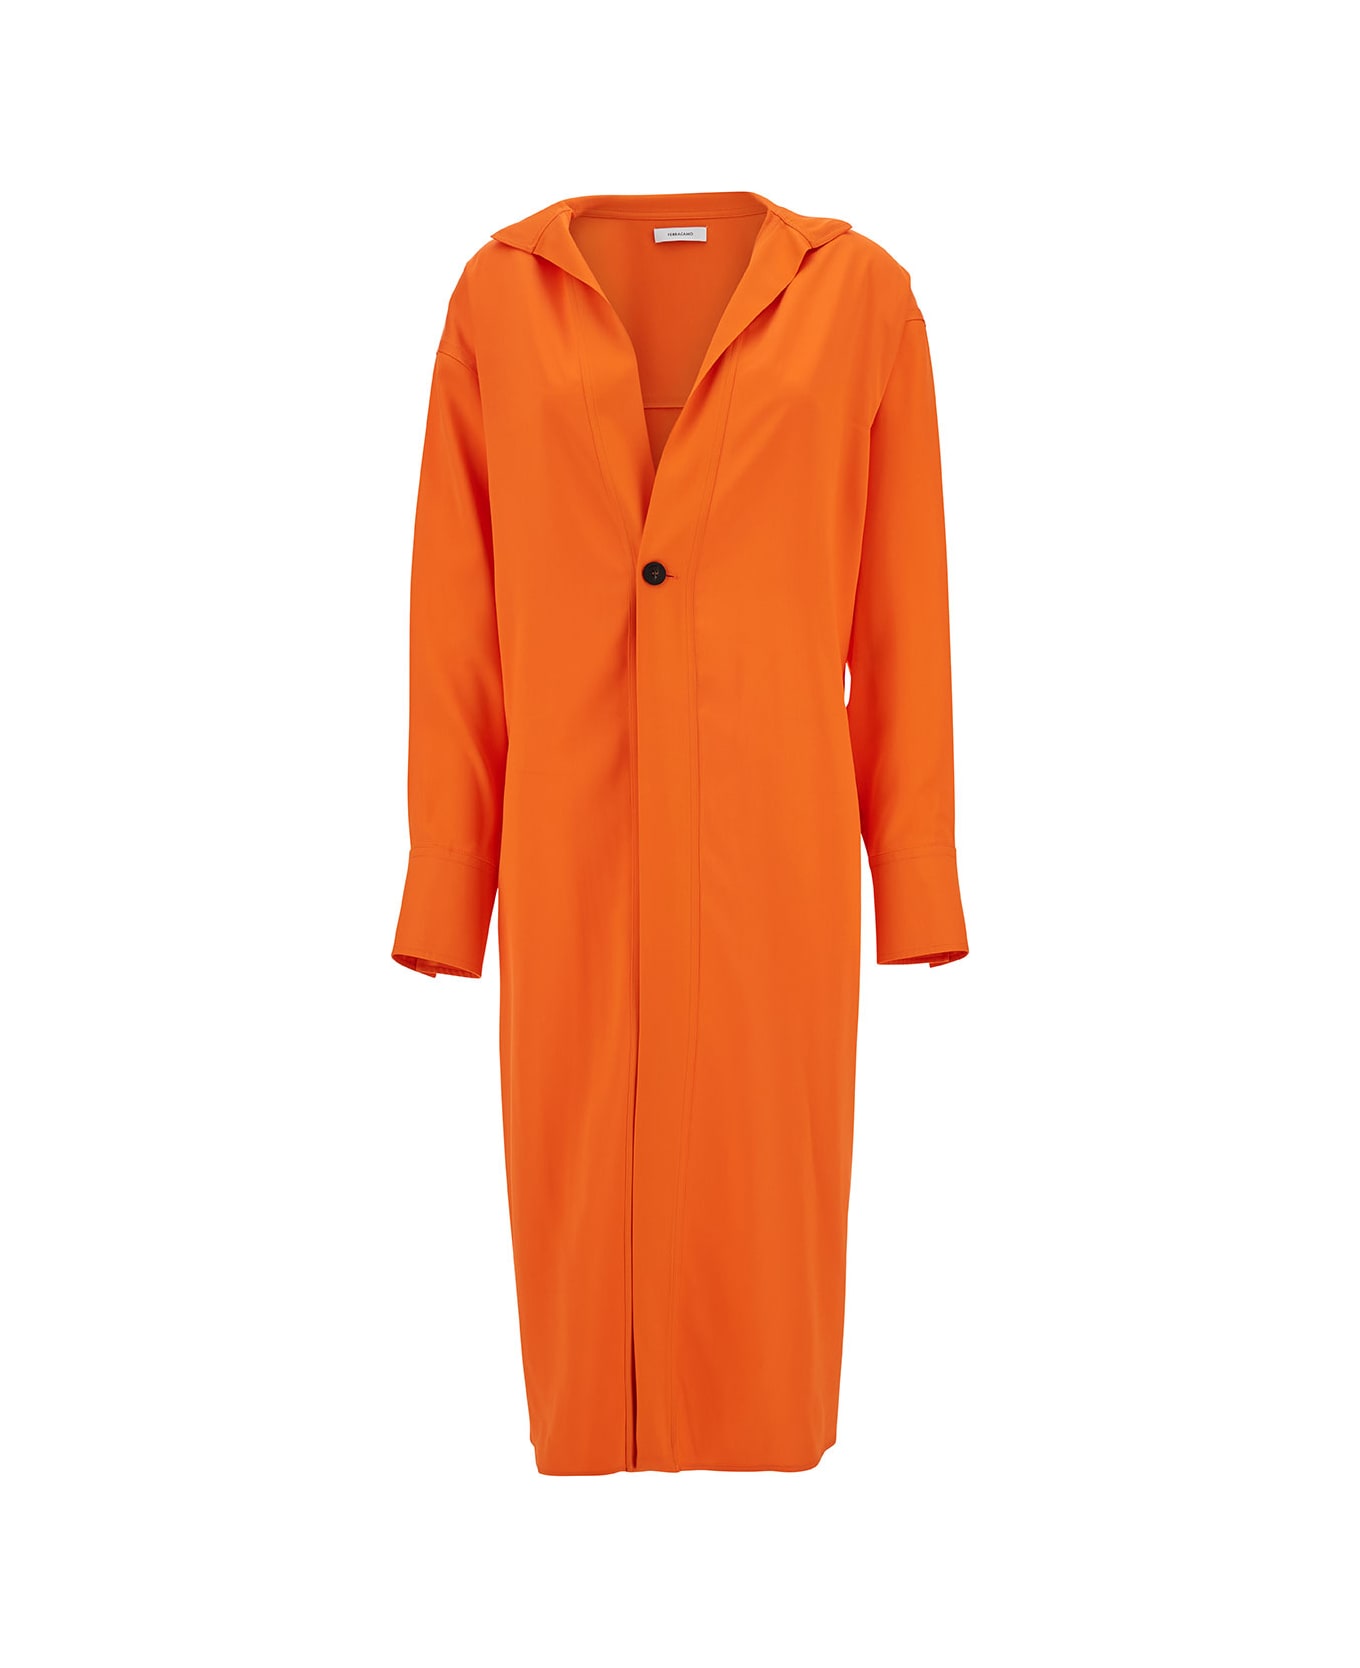 Ferragamo Orange Single-breasted Coat With A Single Button In Stretch Viscose Blend Woman - Orange コート